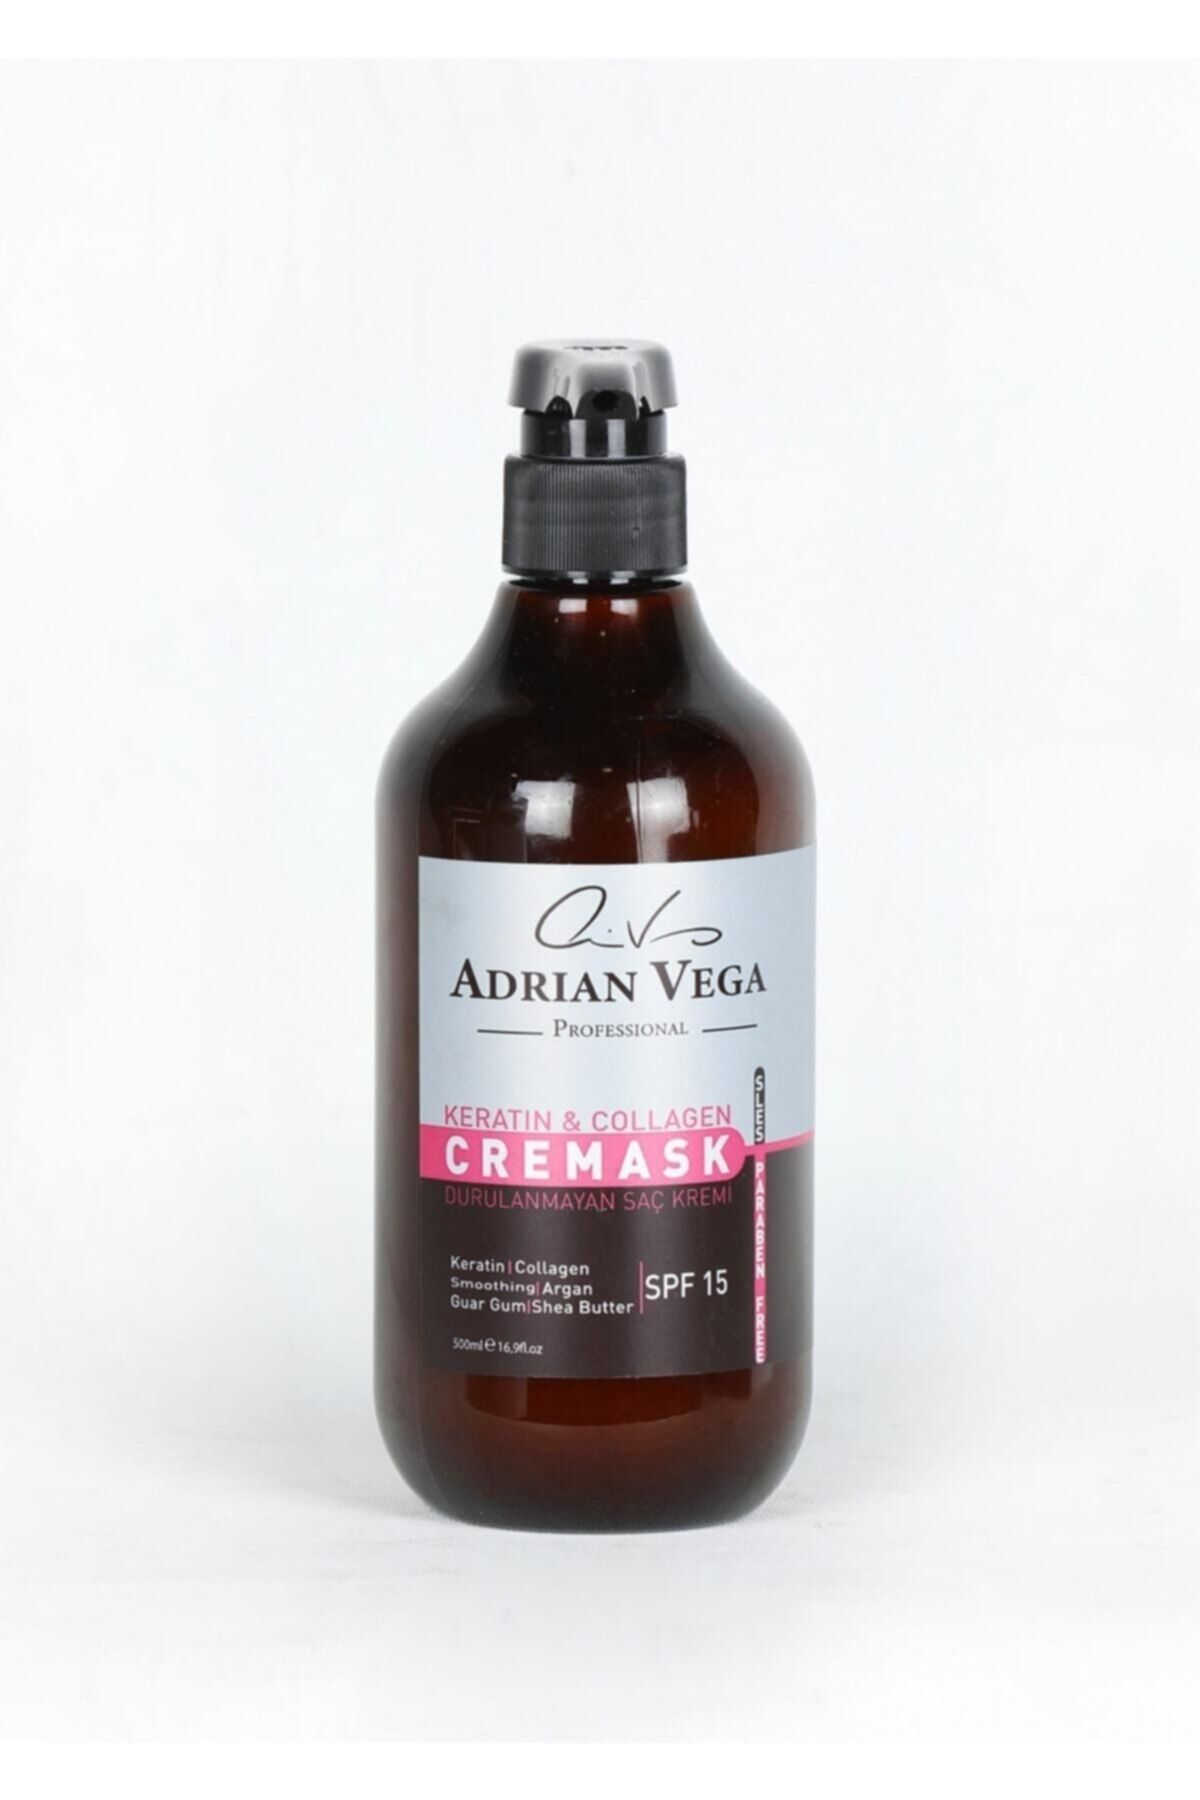 Adrian Vega Professional Keratin & Collagen Cremask Durulanmayan Saç Kremi